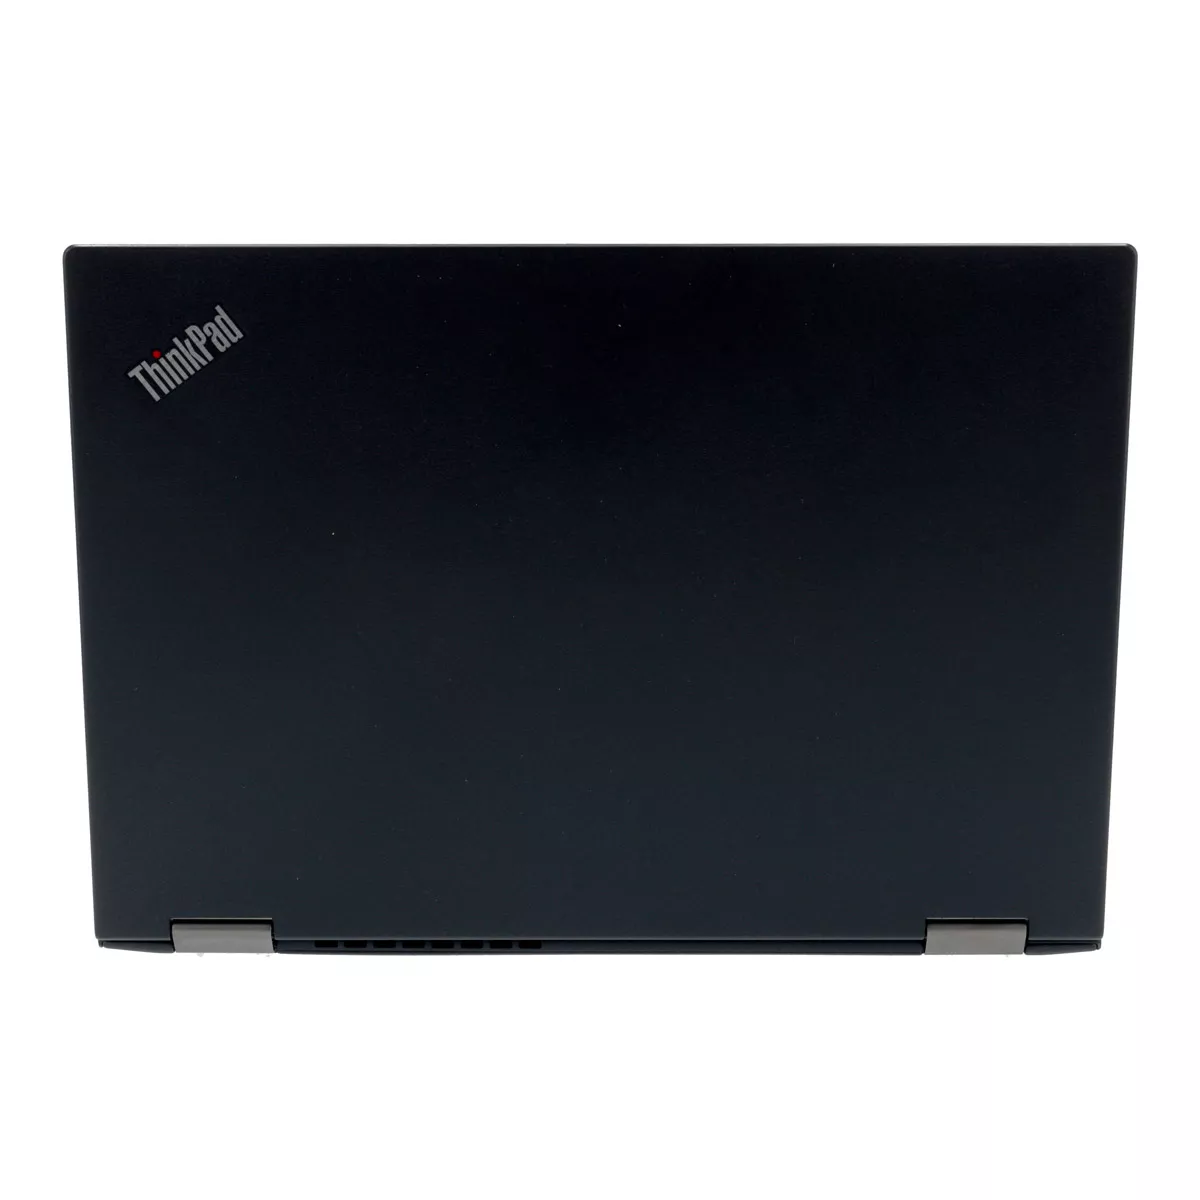 Lenovo ThinkPad X390 Yoga Core i5 8365U Touch 16 GB 500 GB M.2 nVME SSD Webcam A